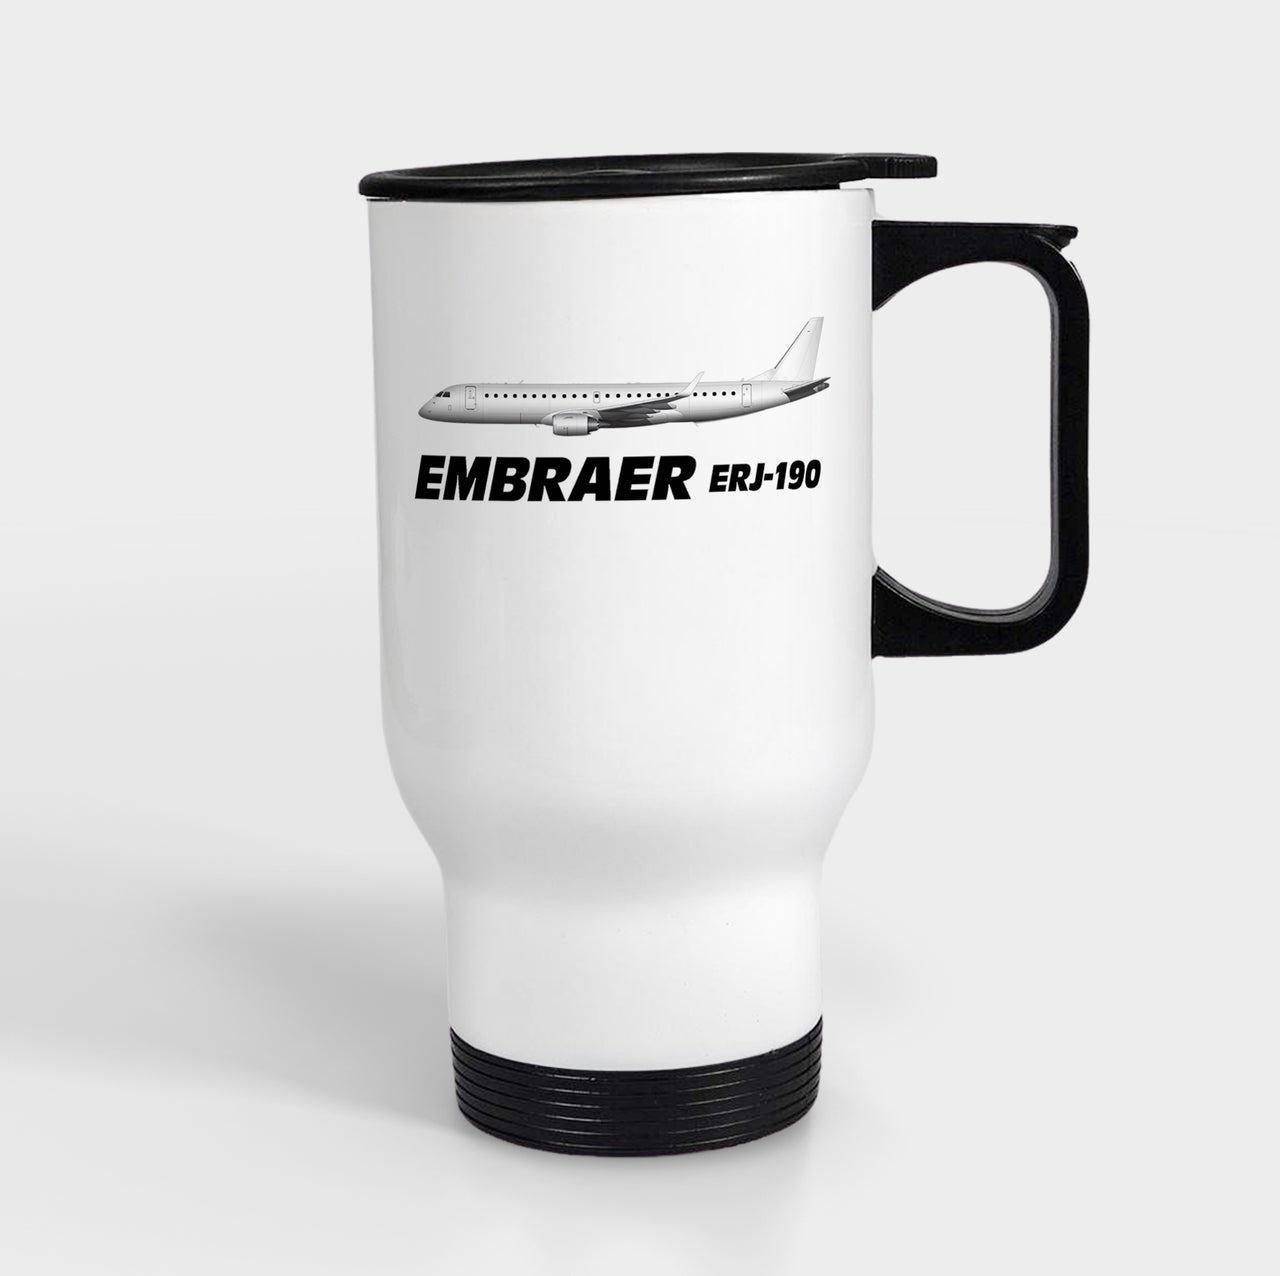 The Embraer ERJ-190 Designed Travel Mugs (With Holder)